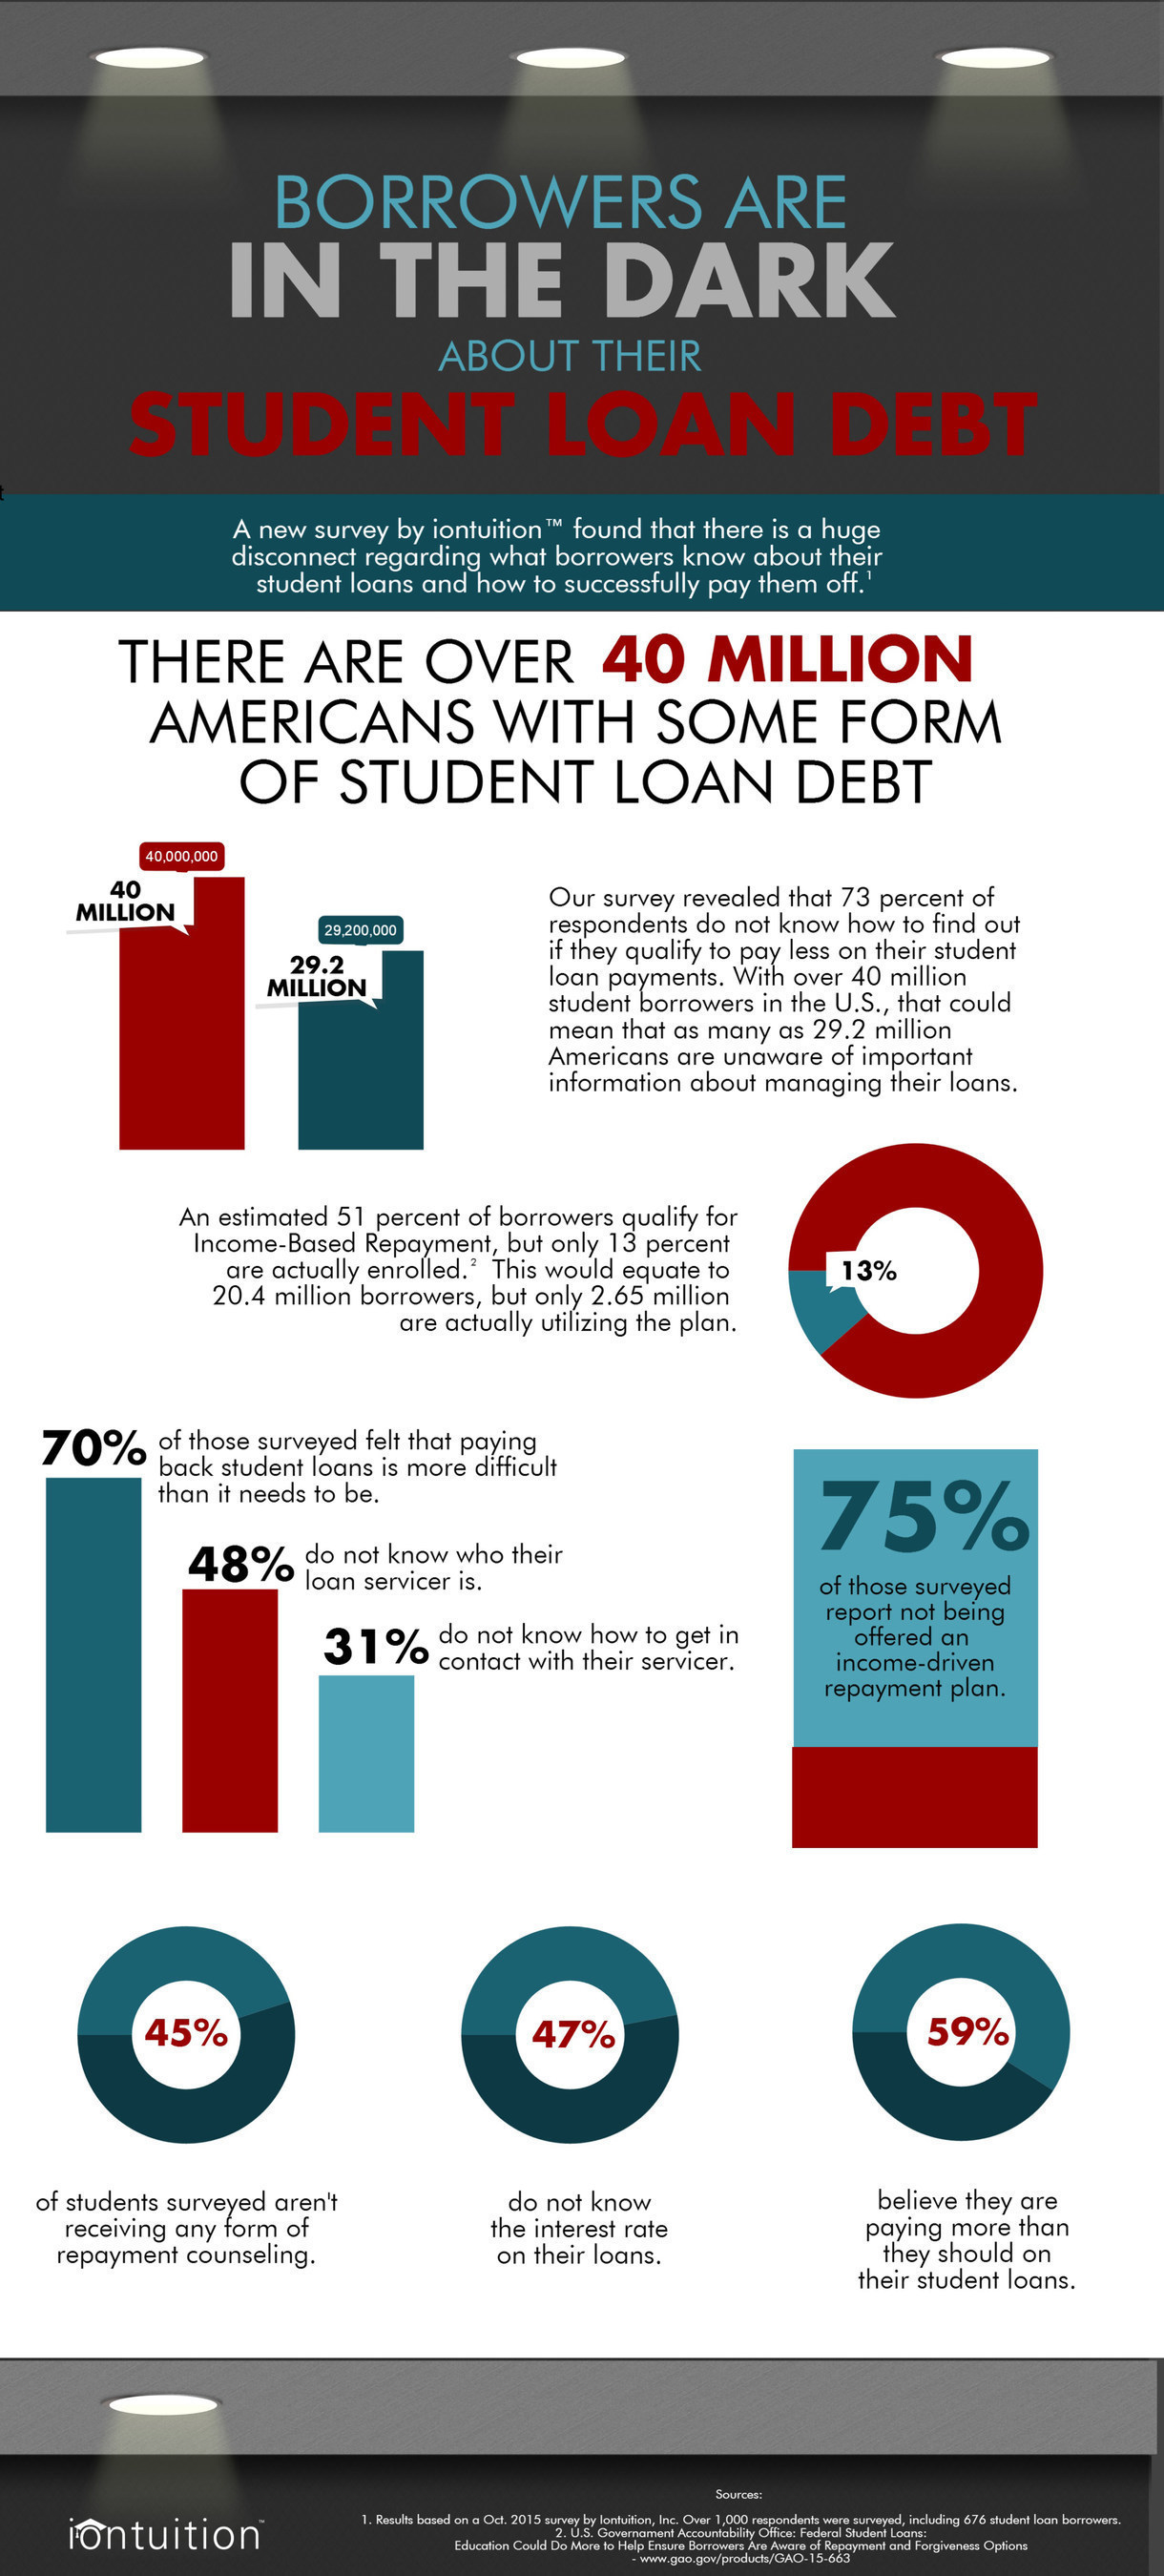 iontuition surveys student loan borrowers